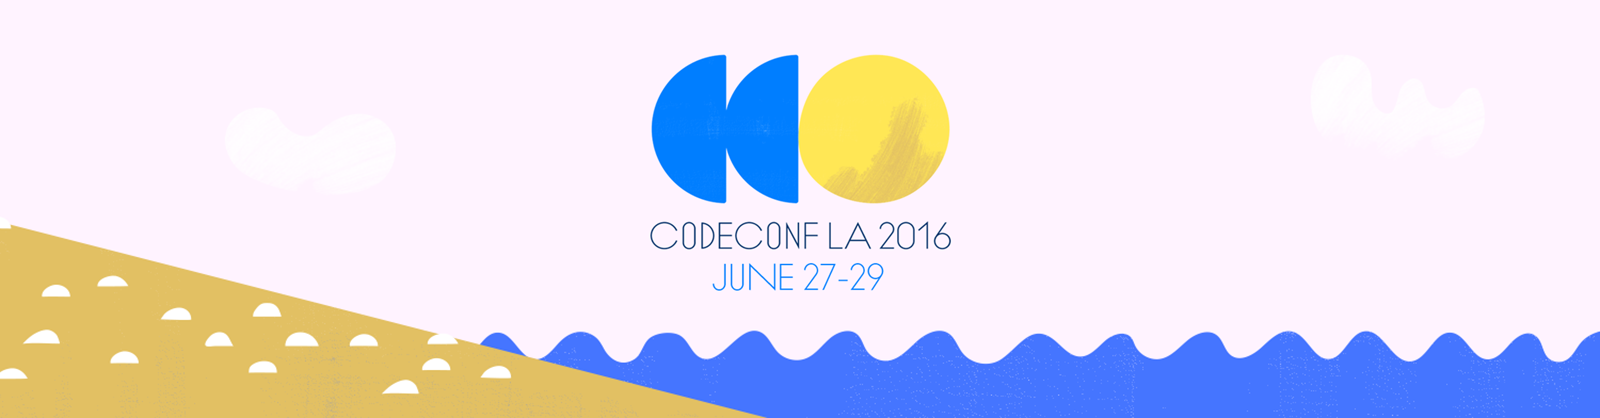 CodeConf LA June 27-29 